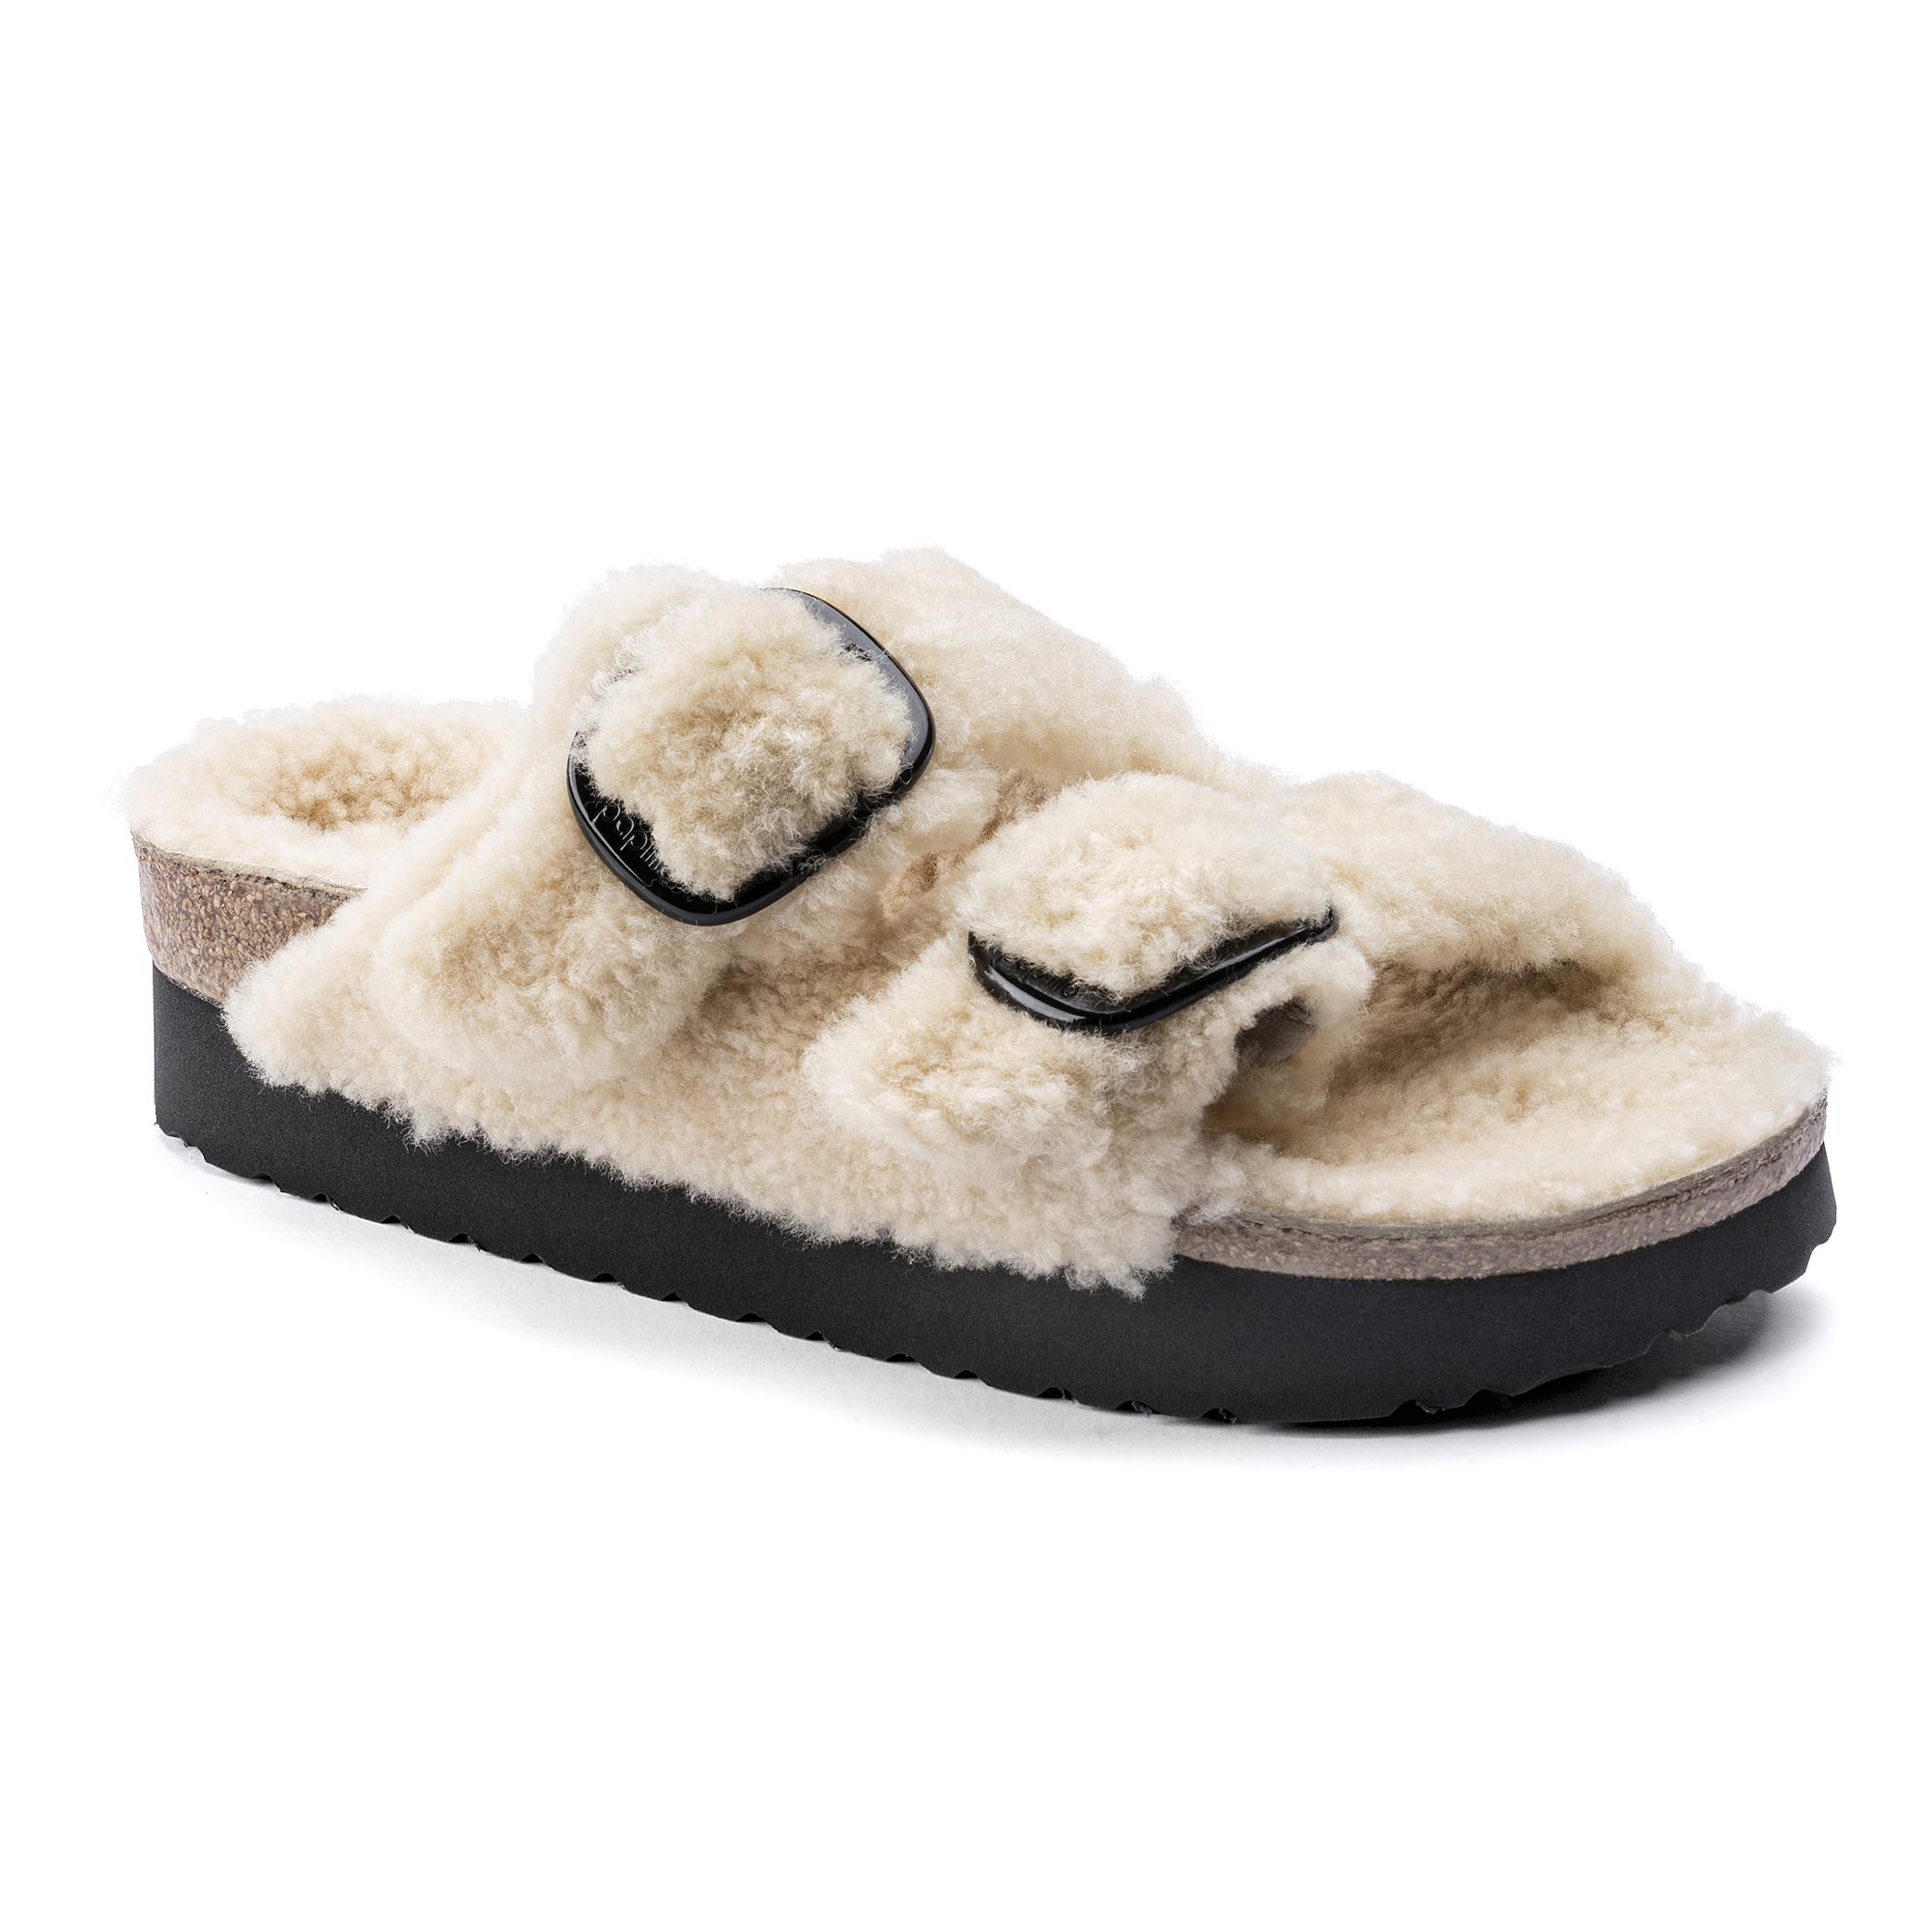 birkenstock shoes with fur